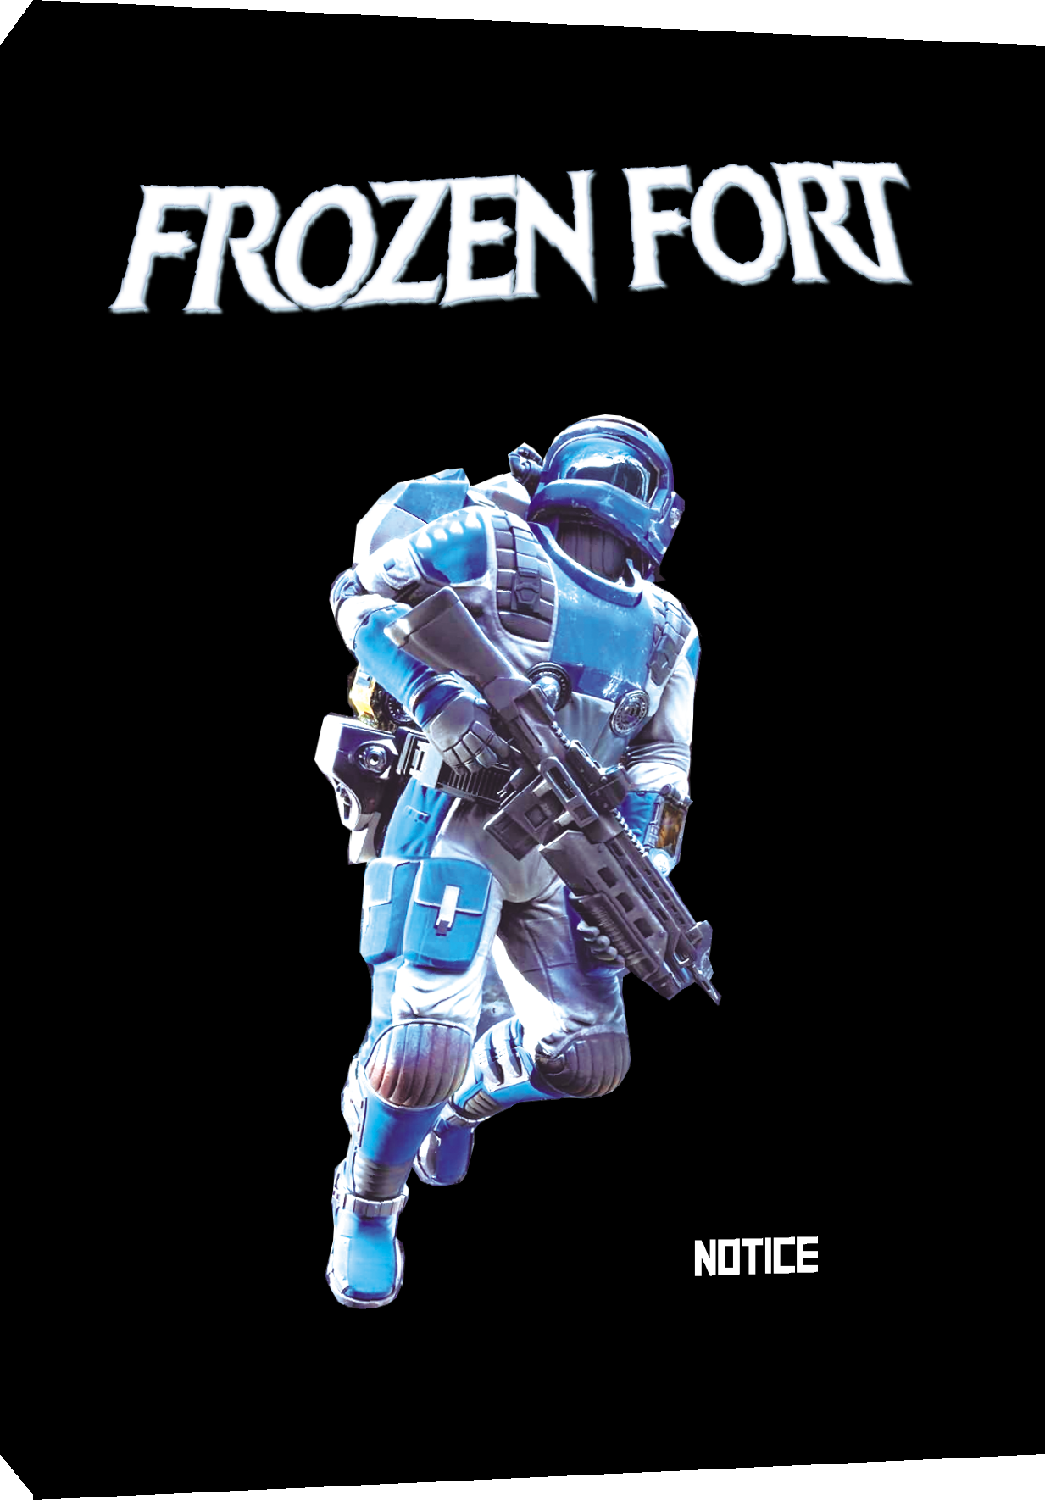 Frozen Fort notice making-of couverture française